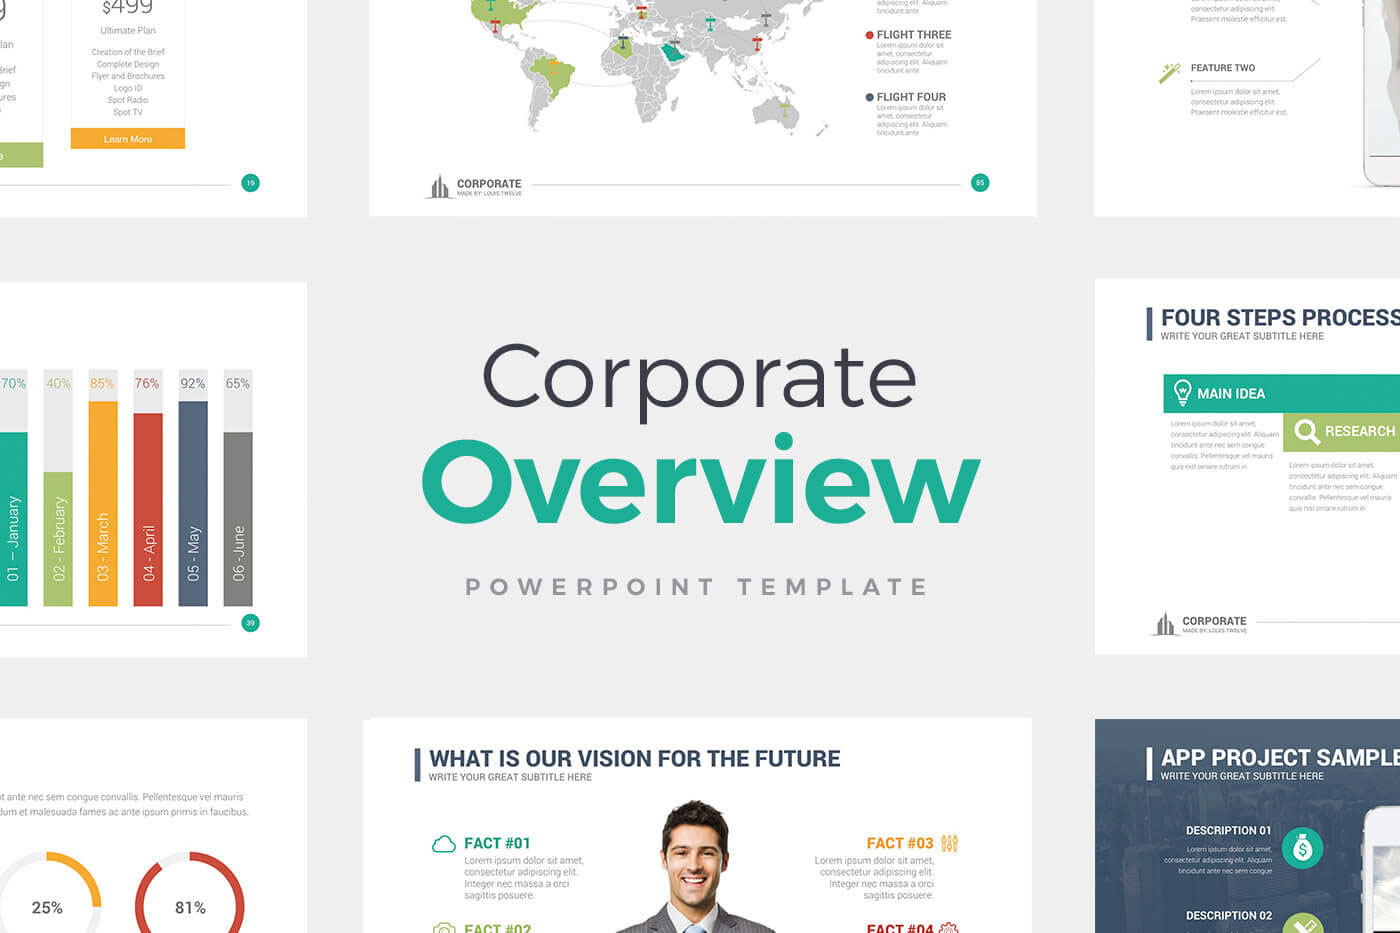 Infographics Templates - PowerPoint Templates - Keynote Themes - Google Slides